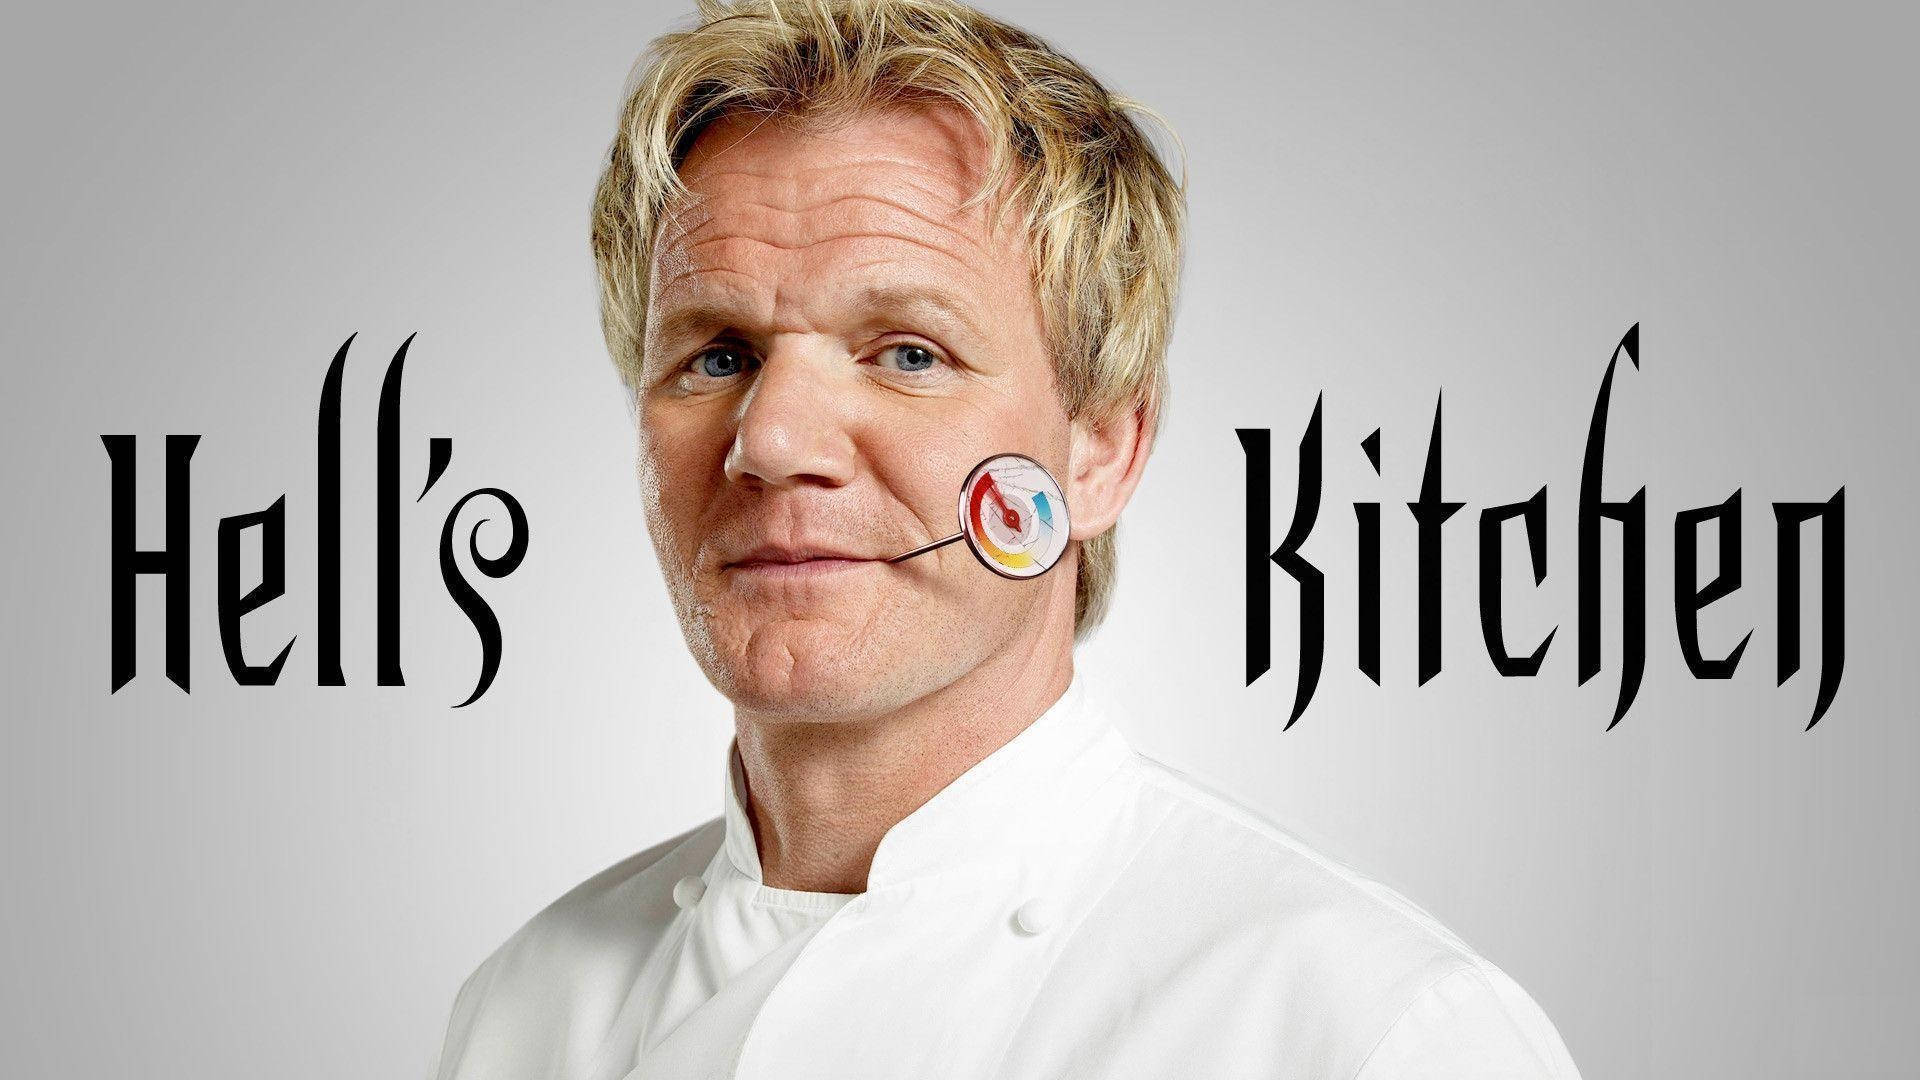 Gordon Ramsay Hell's Kitchen Show Background